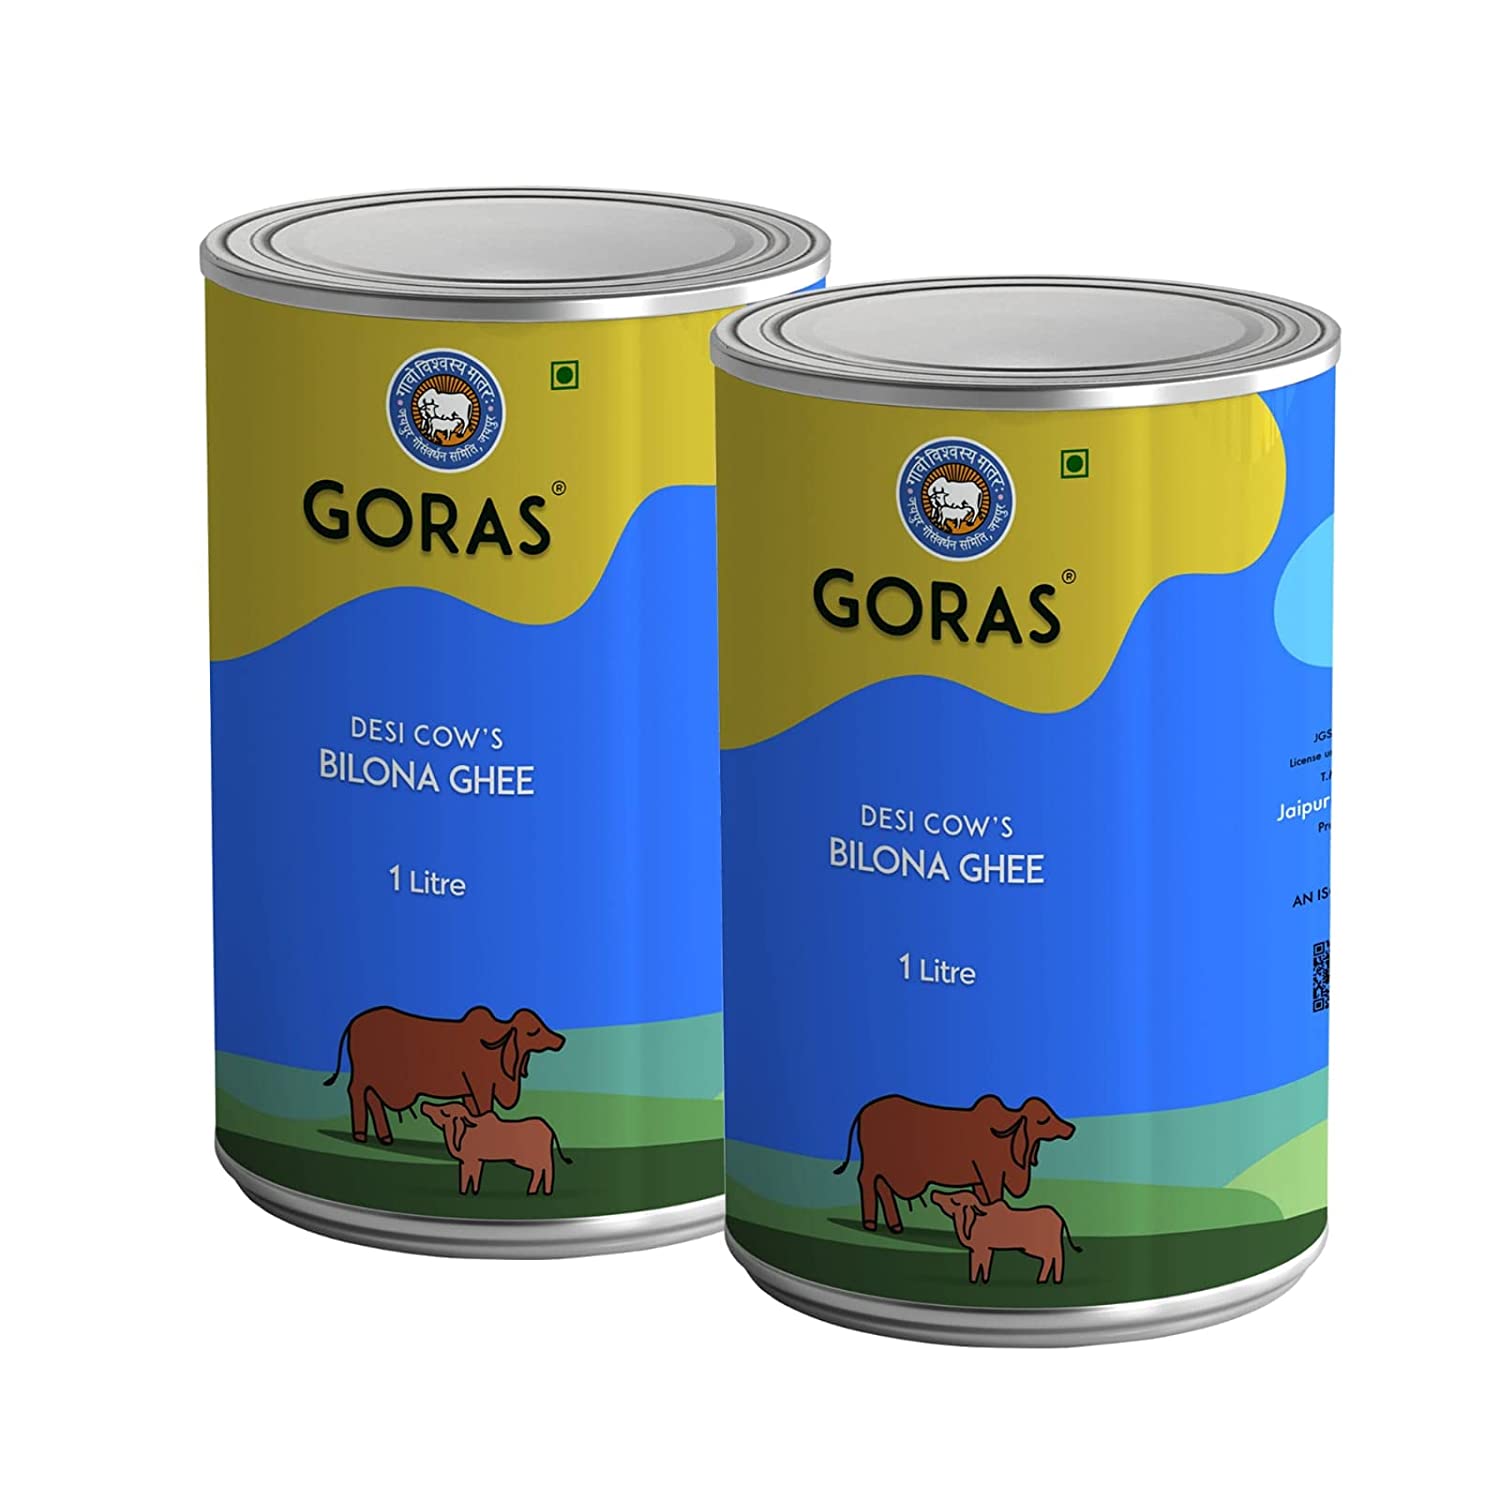 Goras Desi Cow’s Bilona Ghee | 2 Litre | 100% Authentic Ghee with Rich Aroma